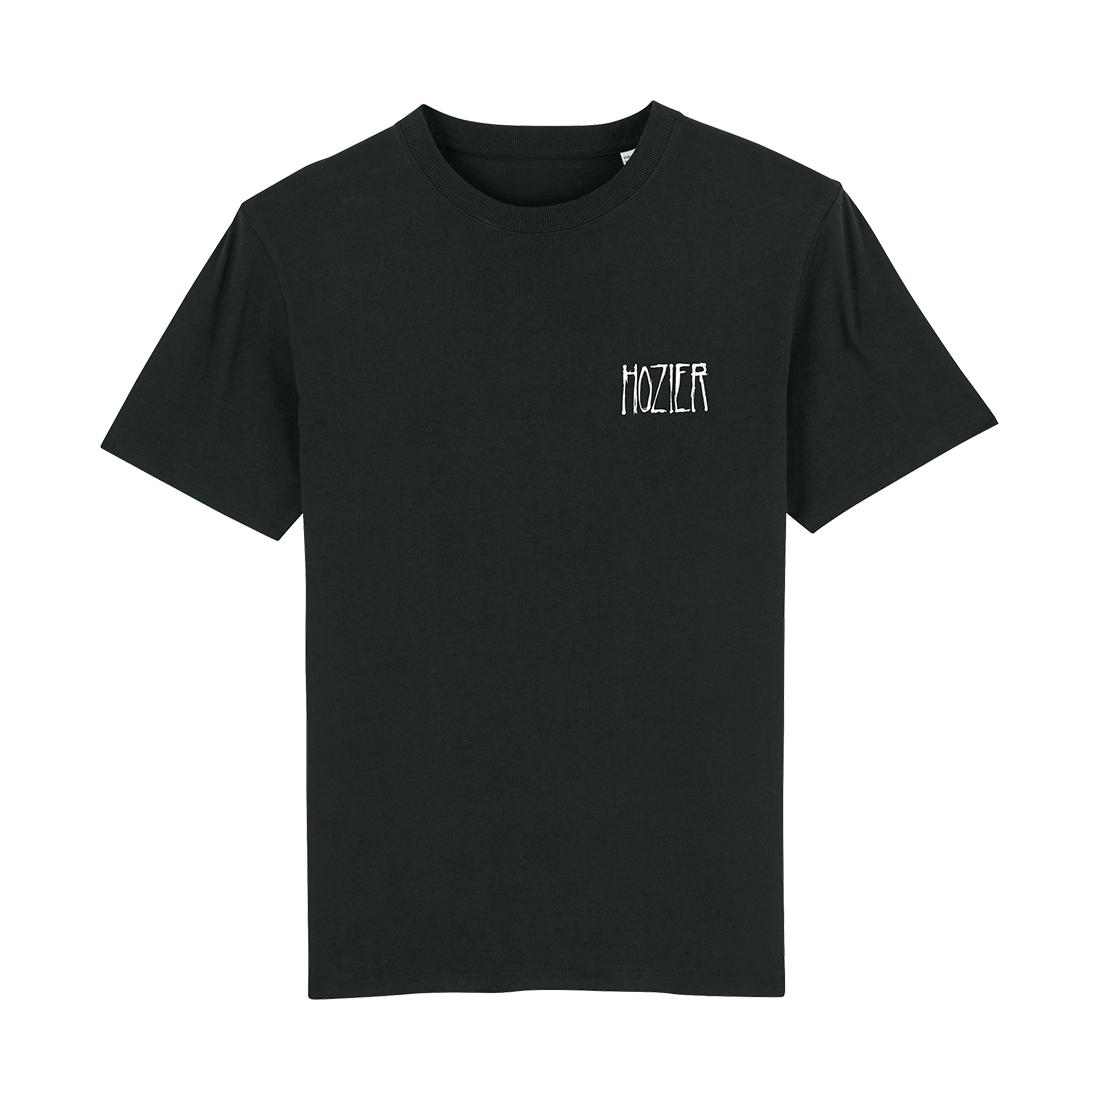 Hozier - Black Simple Living Things Back Print T-Shirt